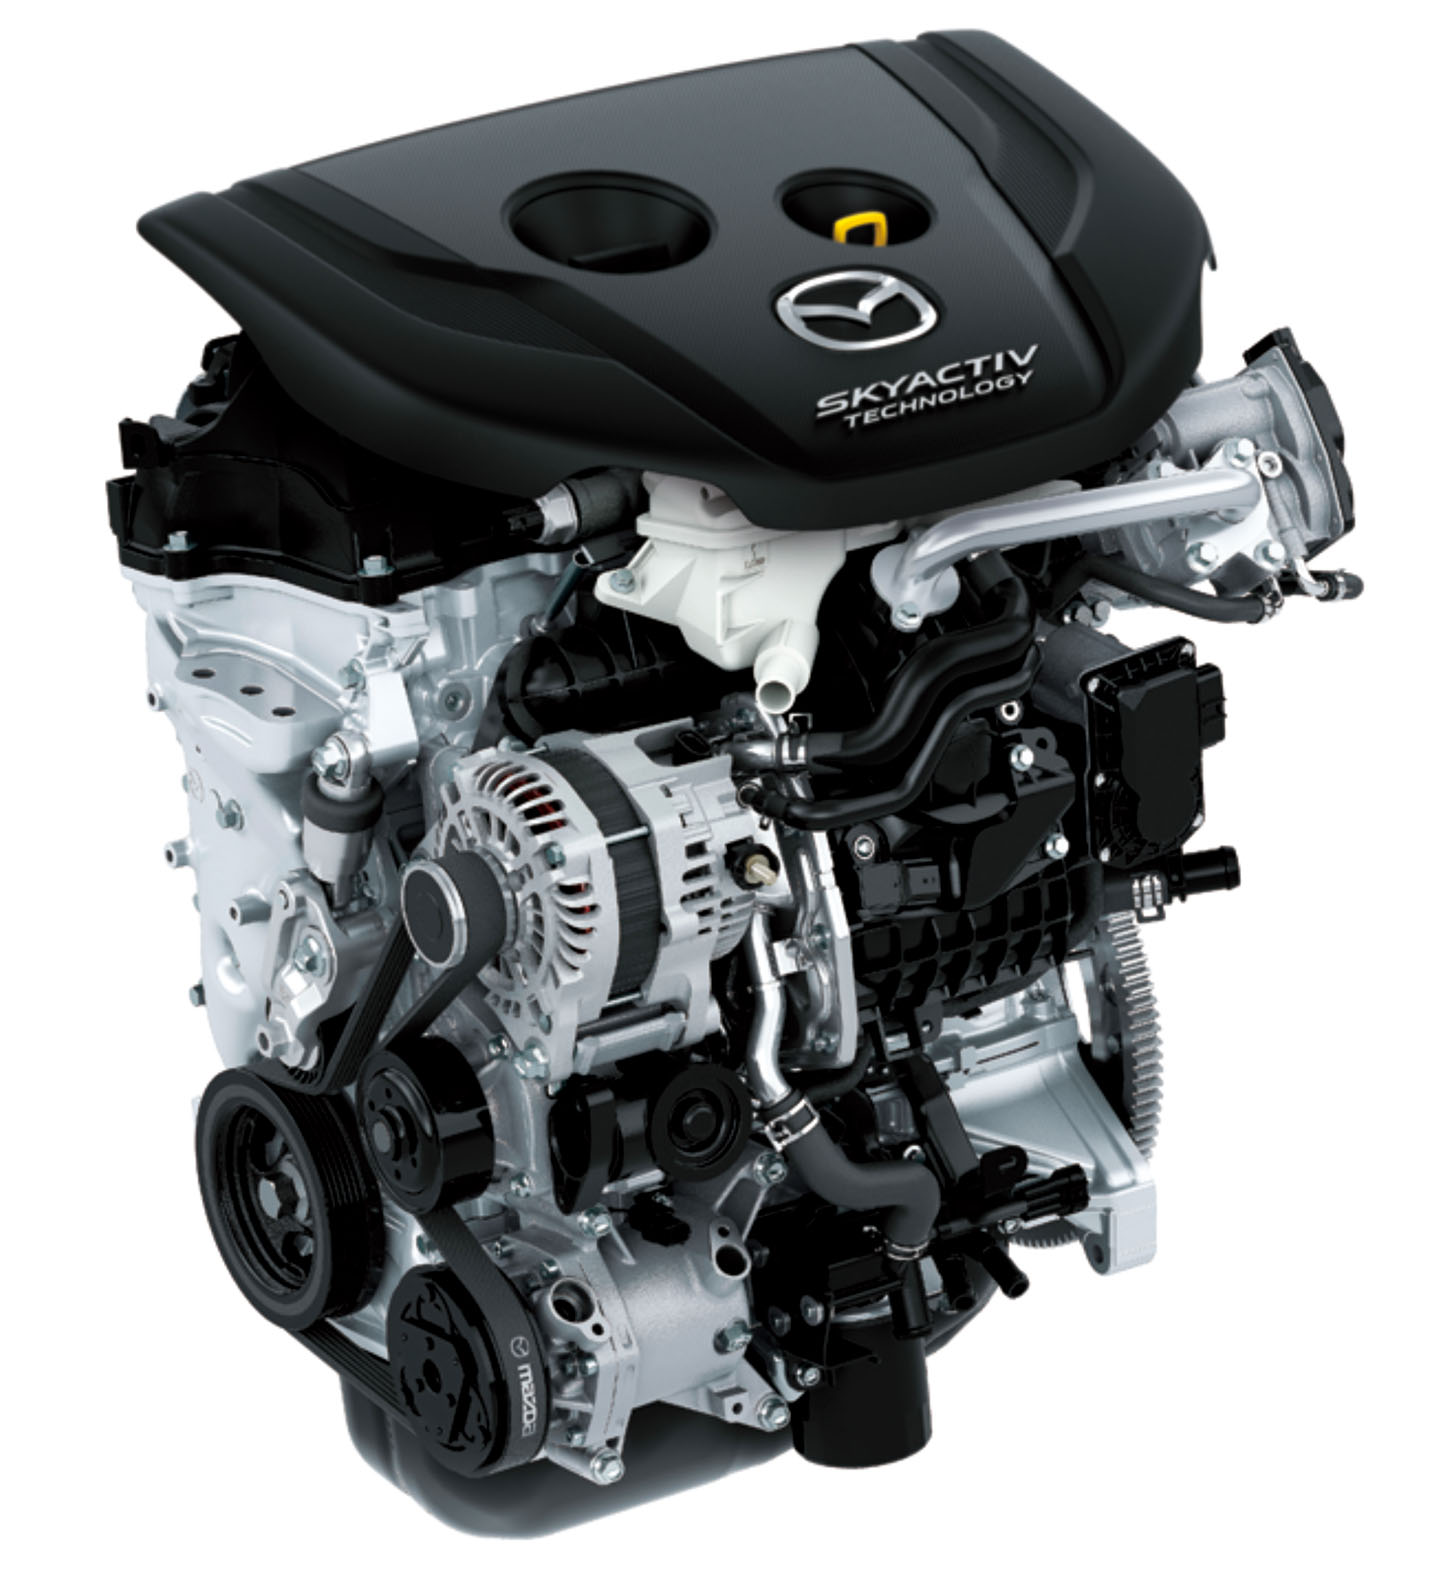 Мазда сх5 двигатель 2. Двигатель Mazda CX-5 2.0 SKYACTIV. Mazda SKYACTIV-G 2.5. Двигатель Мазда 2.5 скайактив. Двигатель Mazda Skyactive 2,0.